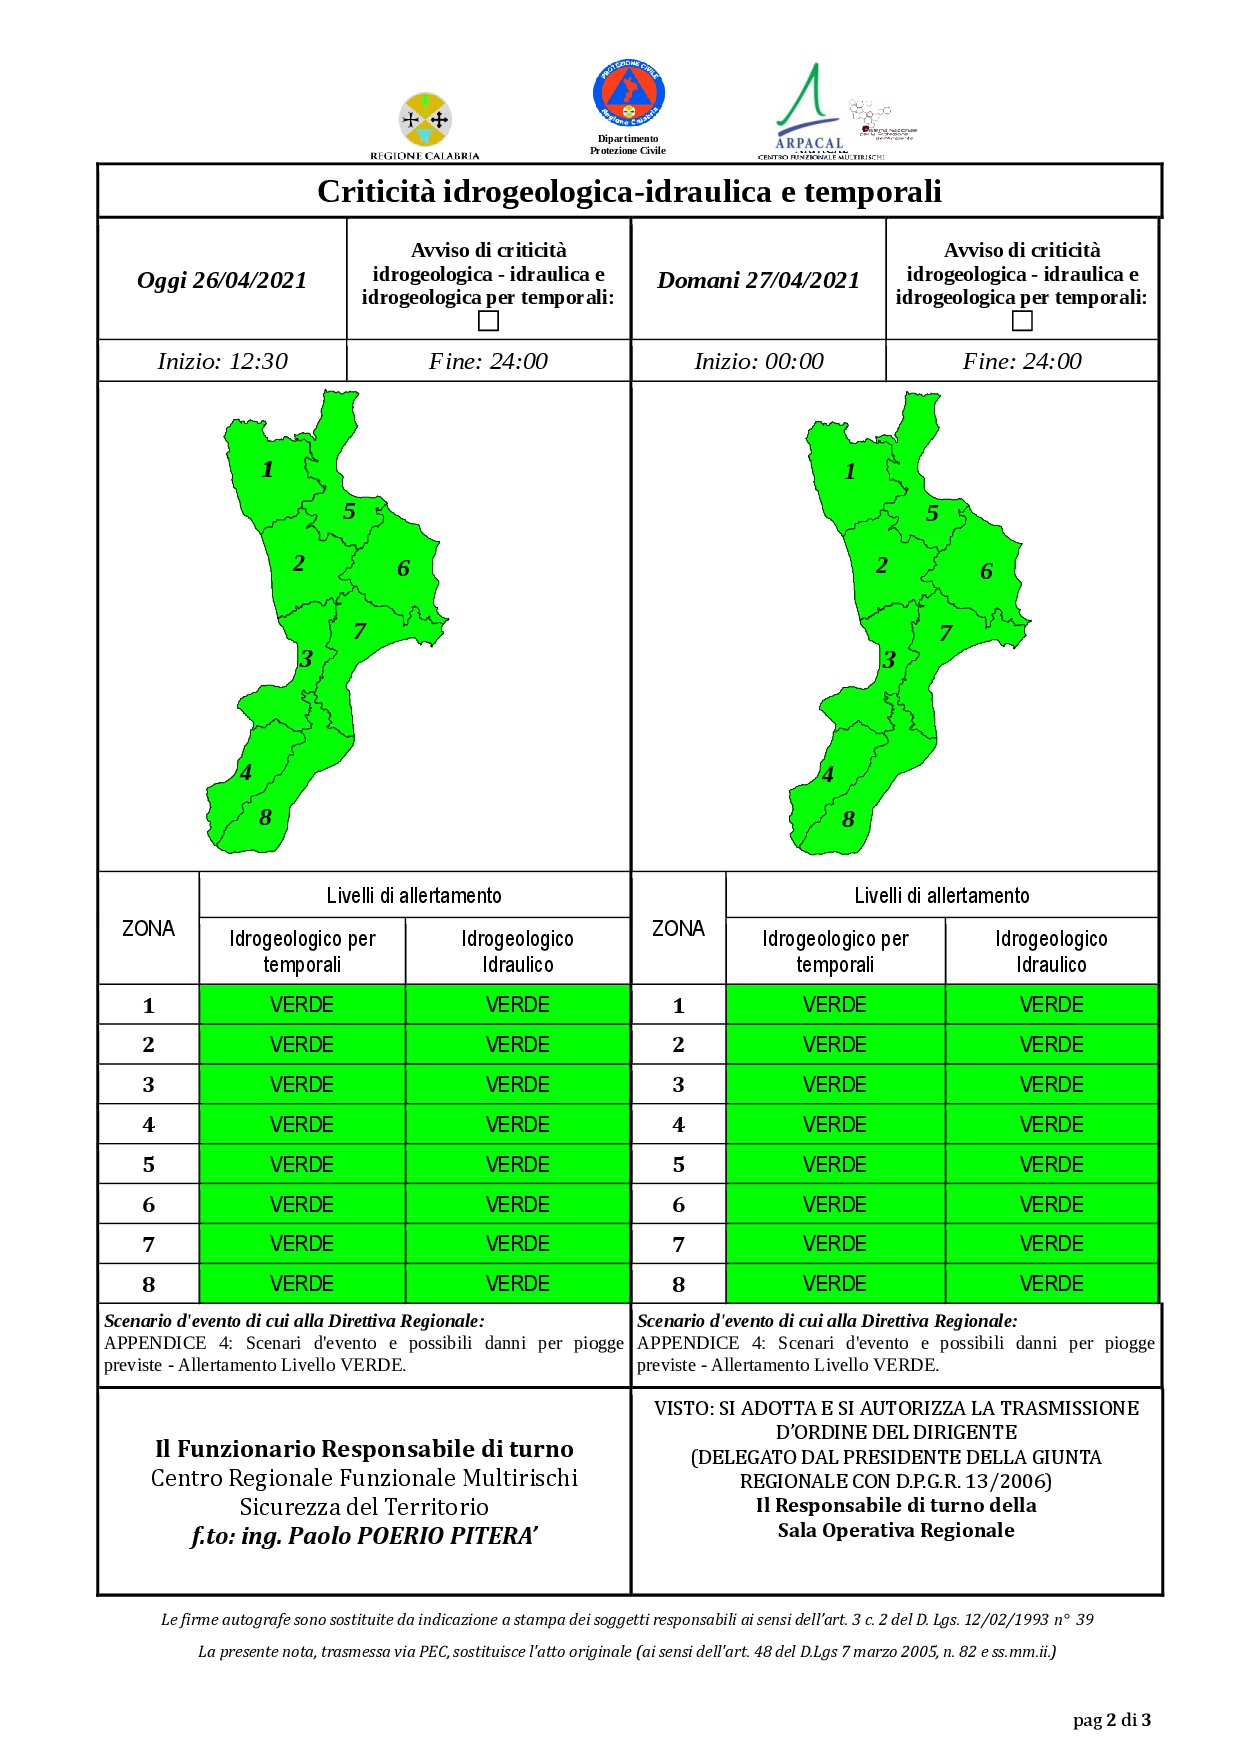 Criticità idrogeologica-idraulica e temporali in Calabria 26-04-2021